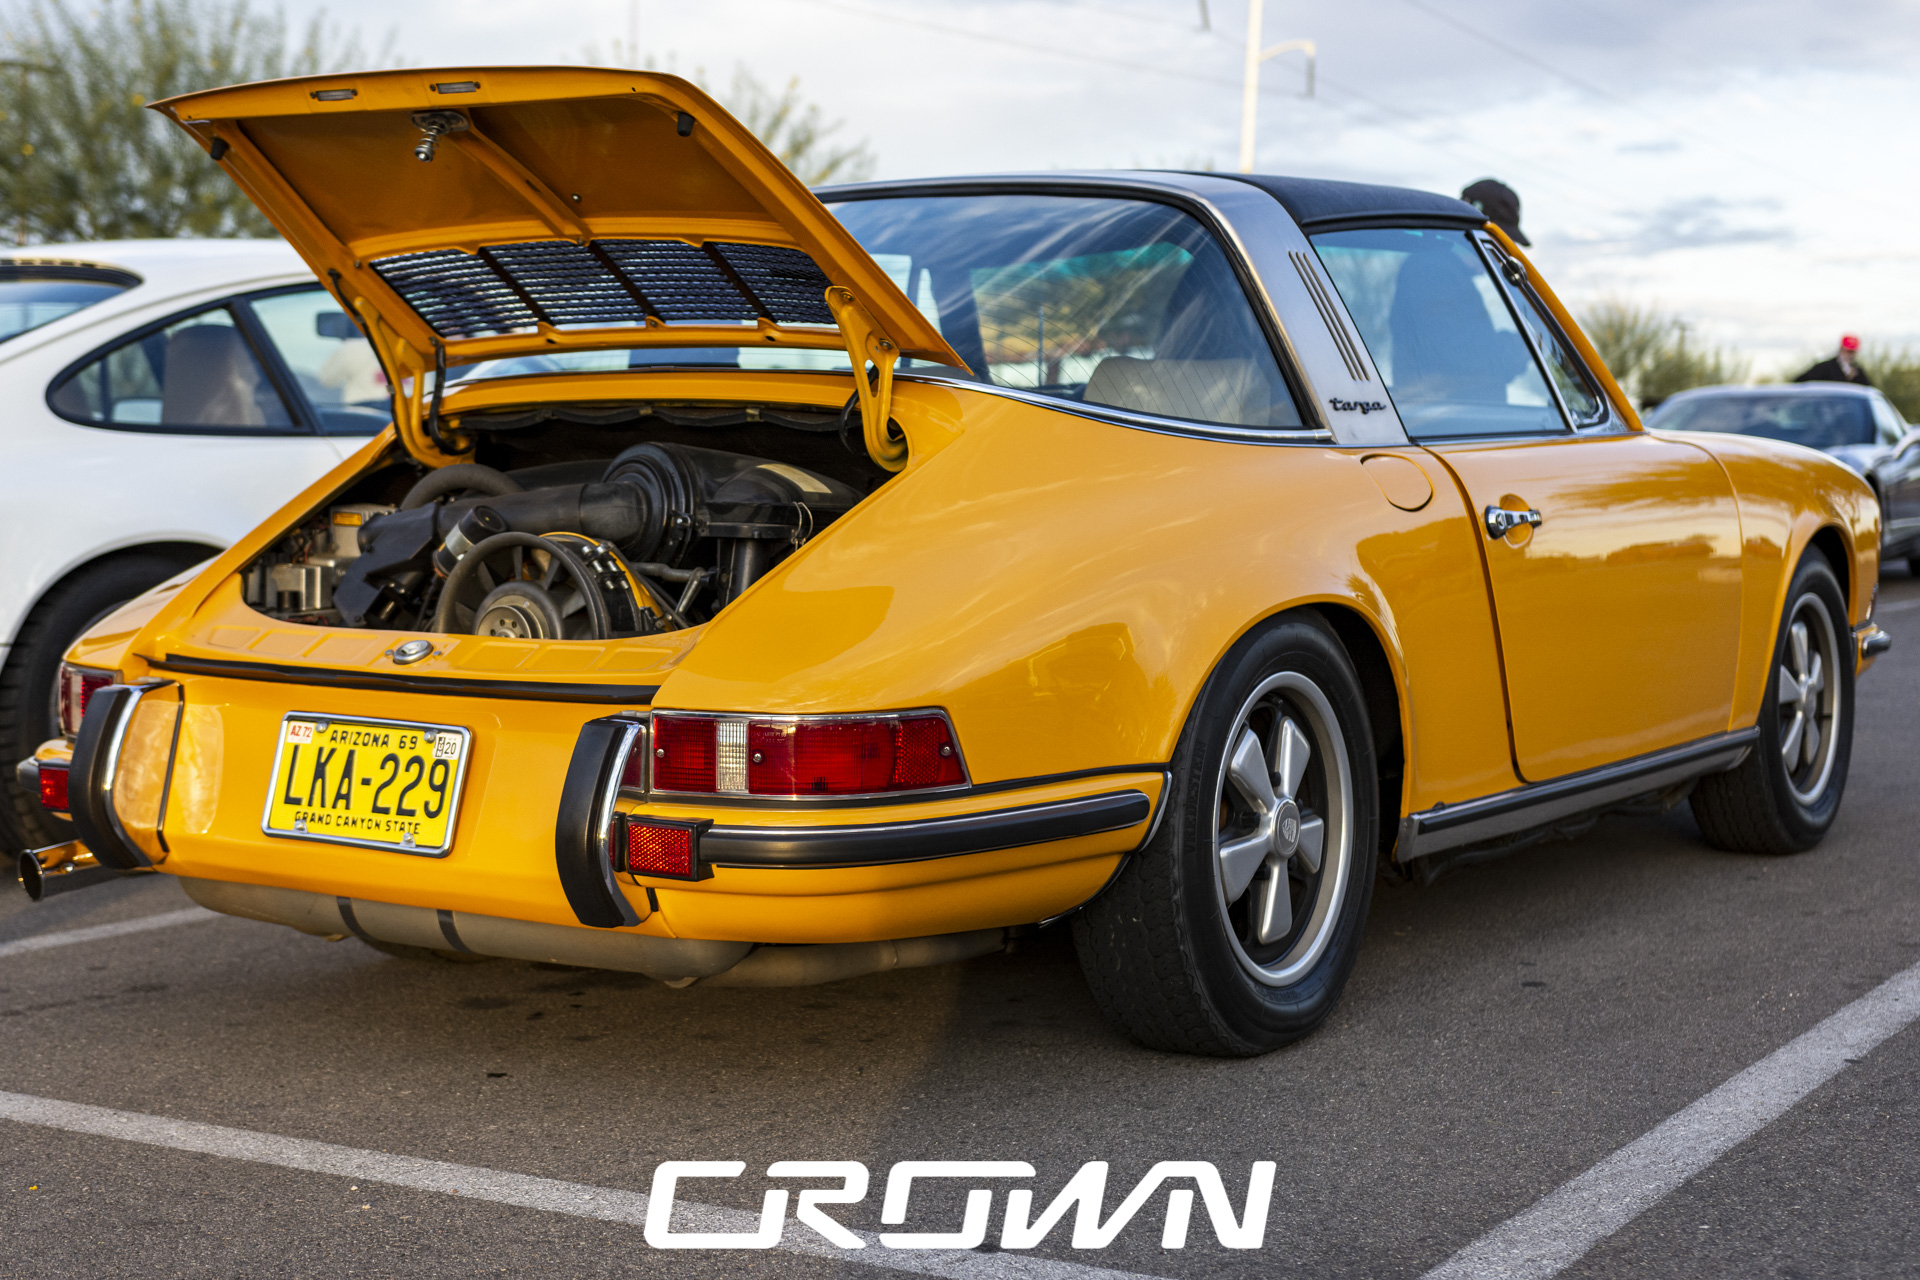 1972 Porsche 911 T Targa in yellow at cars and coffee tucson Arizona